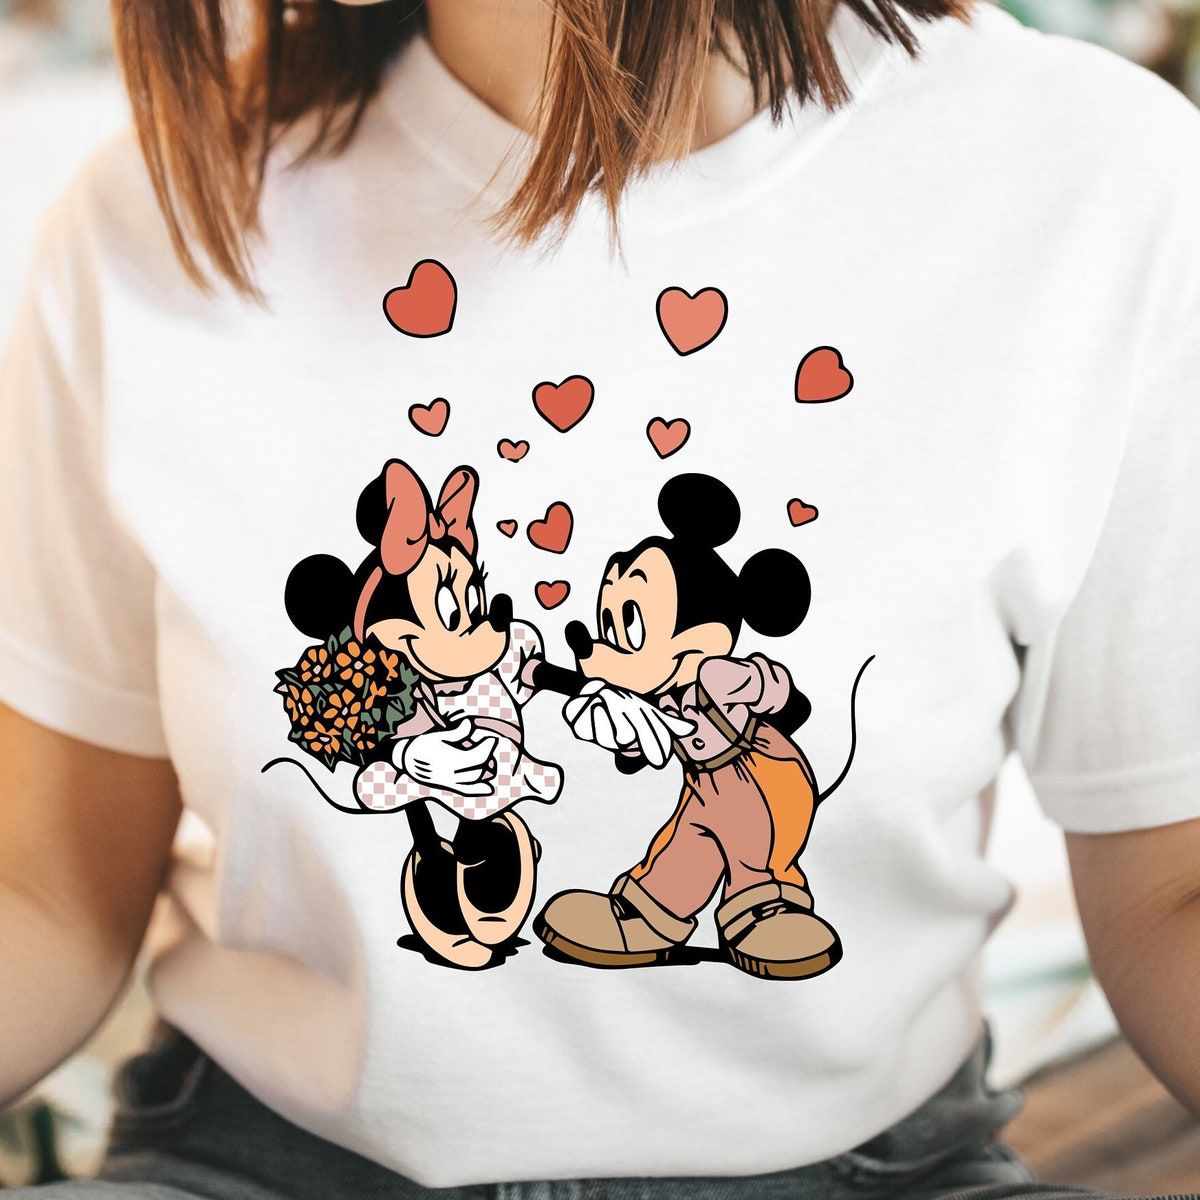 Mickey and Minnie in Love Shirt, Cute Disney Valentine's Day Shirts 💖.
➡️ 𝗚𝗲𝘁 𝟭𝟬% 𝗢𝗙𝗙 𝗡𝗼𝘄: 
thefirstlifestyle.com/product/mickey…

✈ Worldwide Shipping!
#disney #valentinesday #disneyworld #disneyfan #disneyfamily #ilovedisney #tshirt #hoodie #sweatshirt